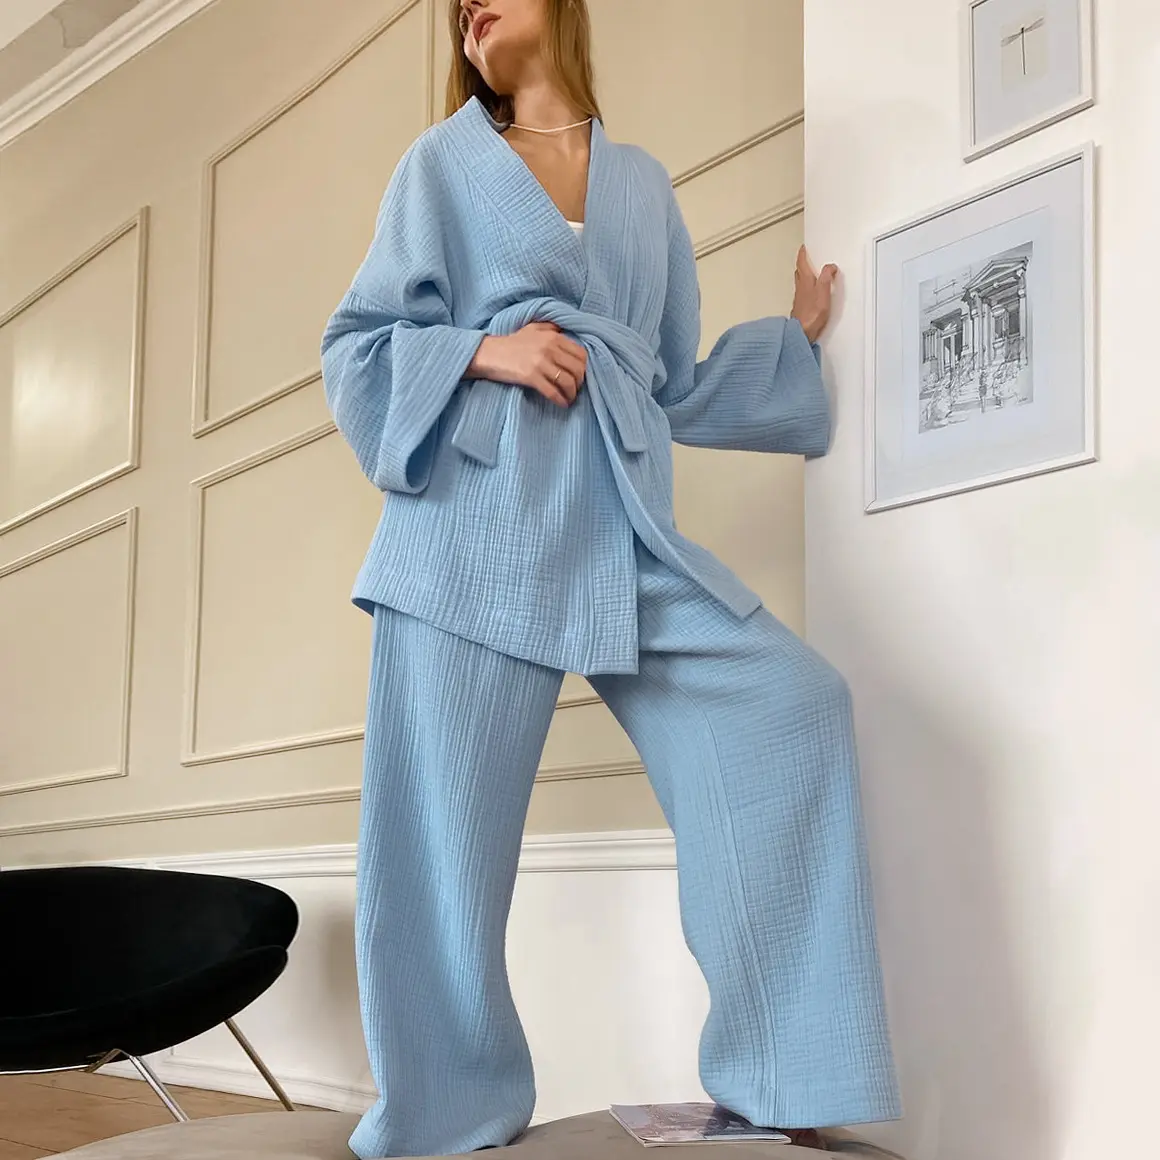 New arrivals custom women cotton home wear loose sleepwear kimono robe lounge wear pajamas set